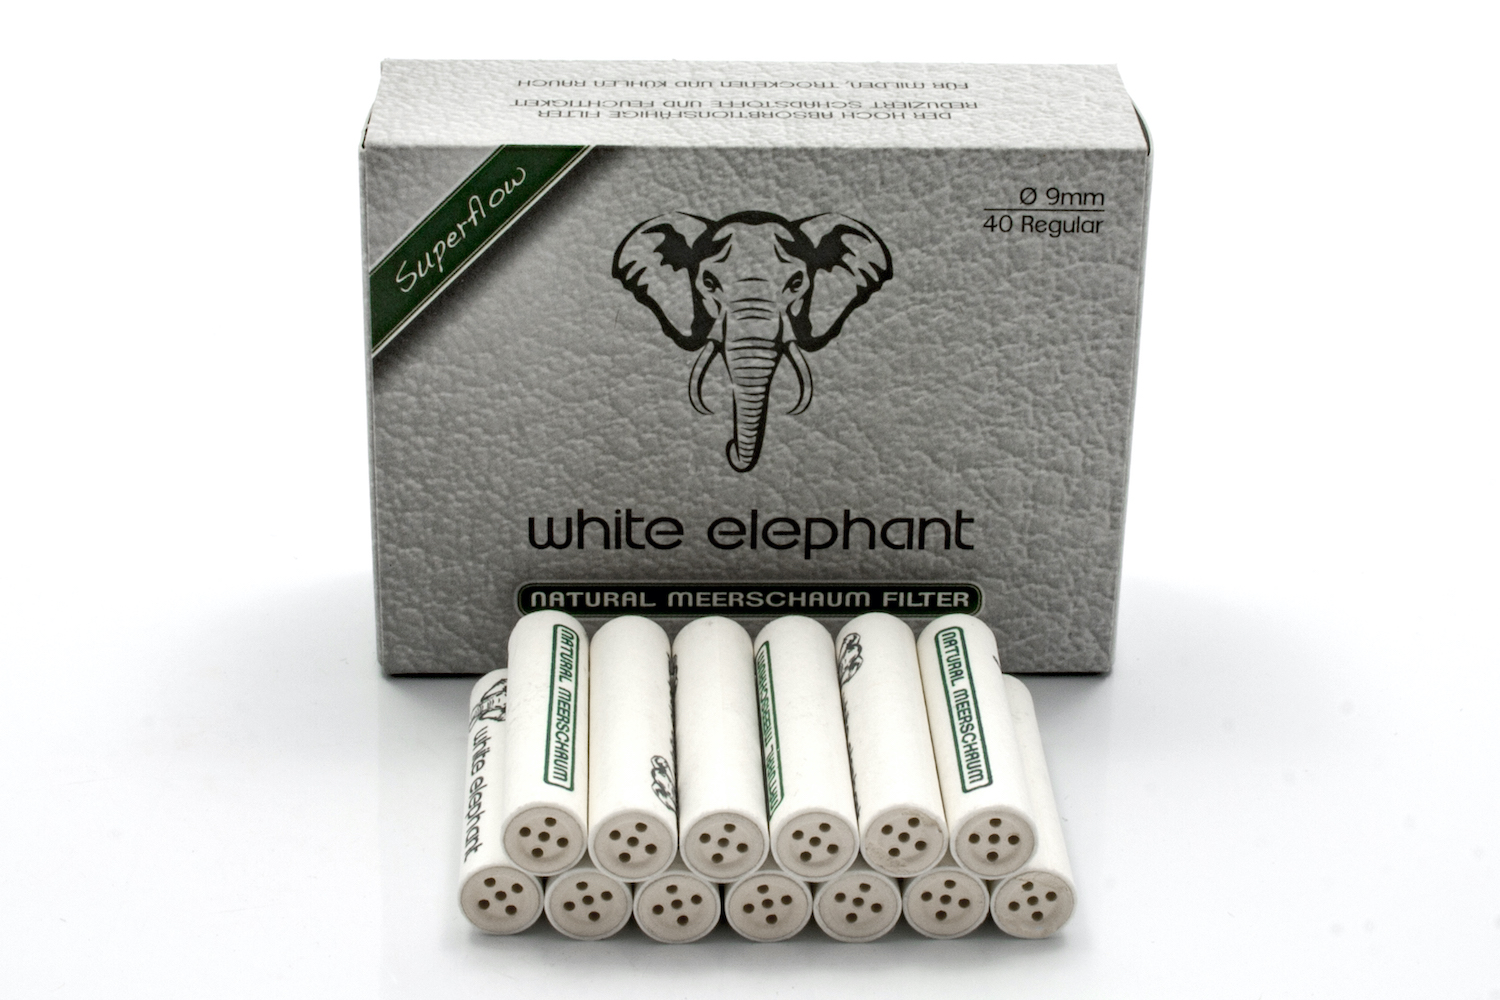 Filtry fajkowe White Elephant 05027 pianką morską/ceramica 9 mm, 40 szt./op.